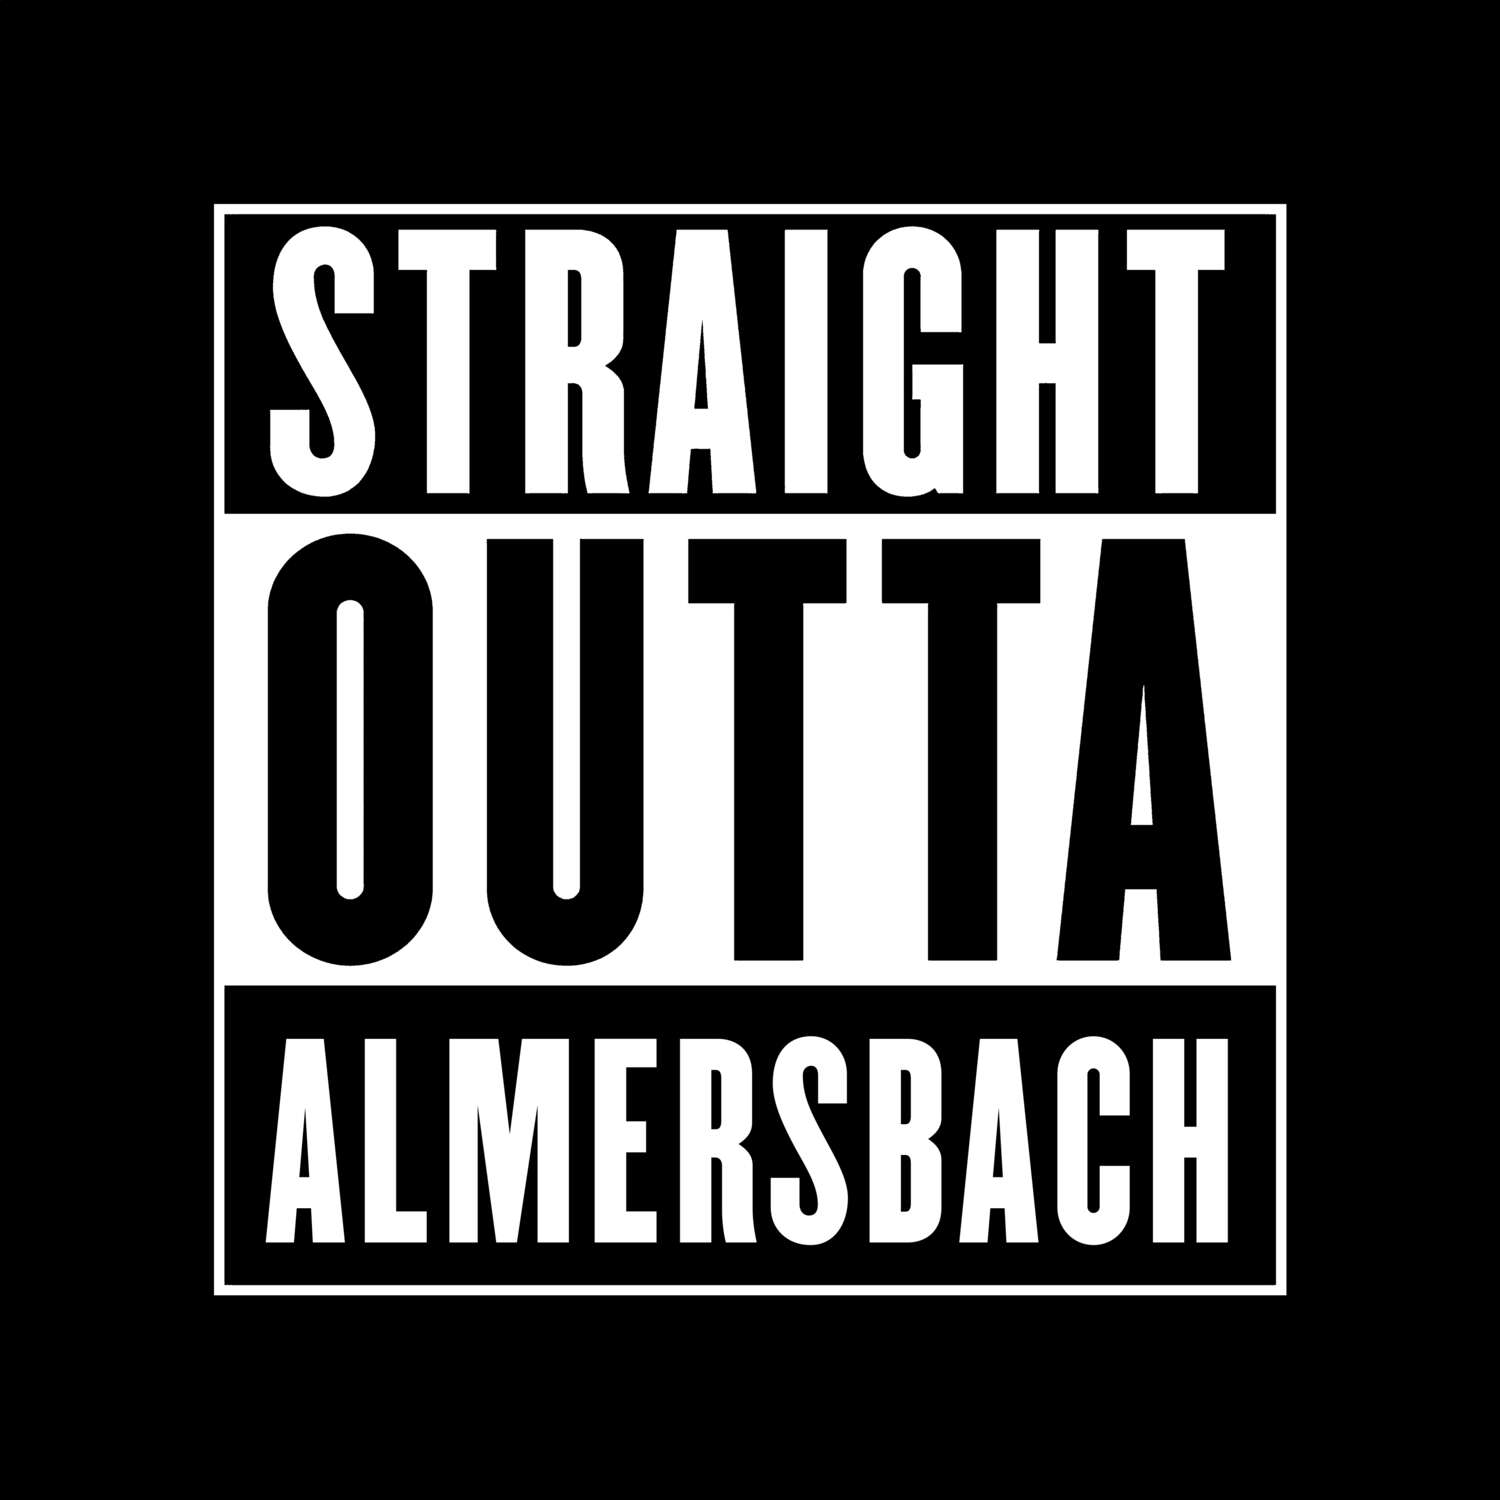 Almersbach T-Shirt »Straight Outta«